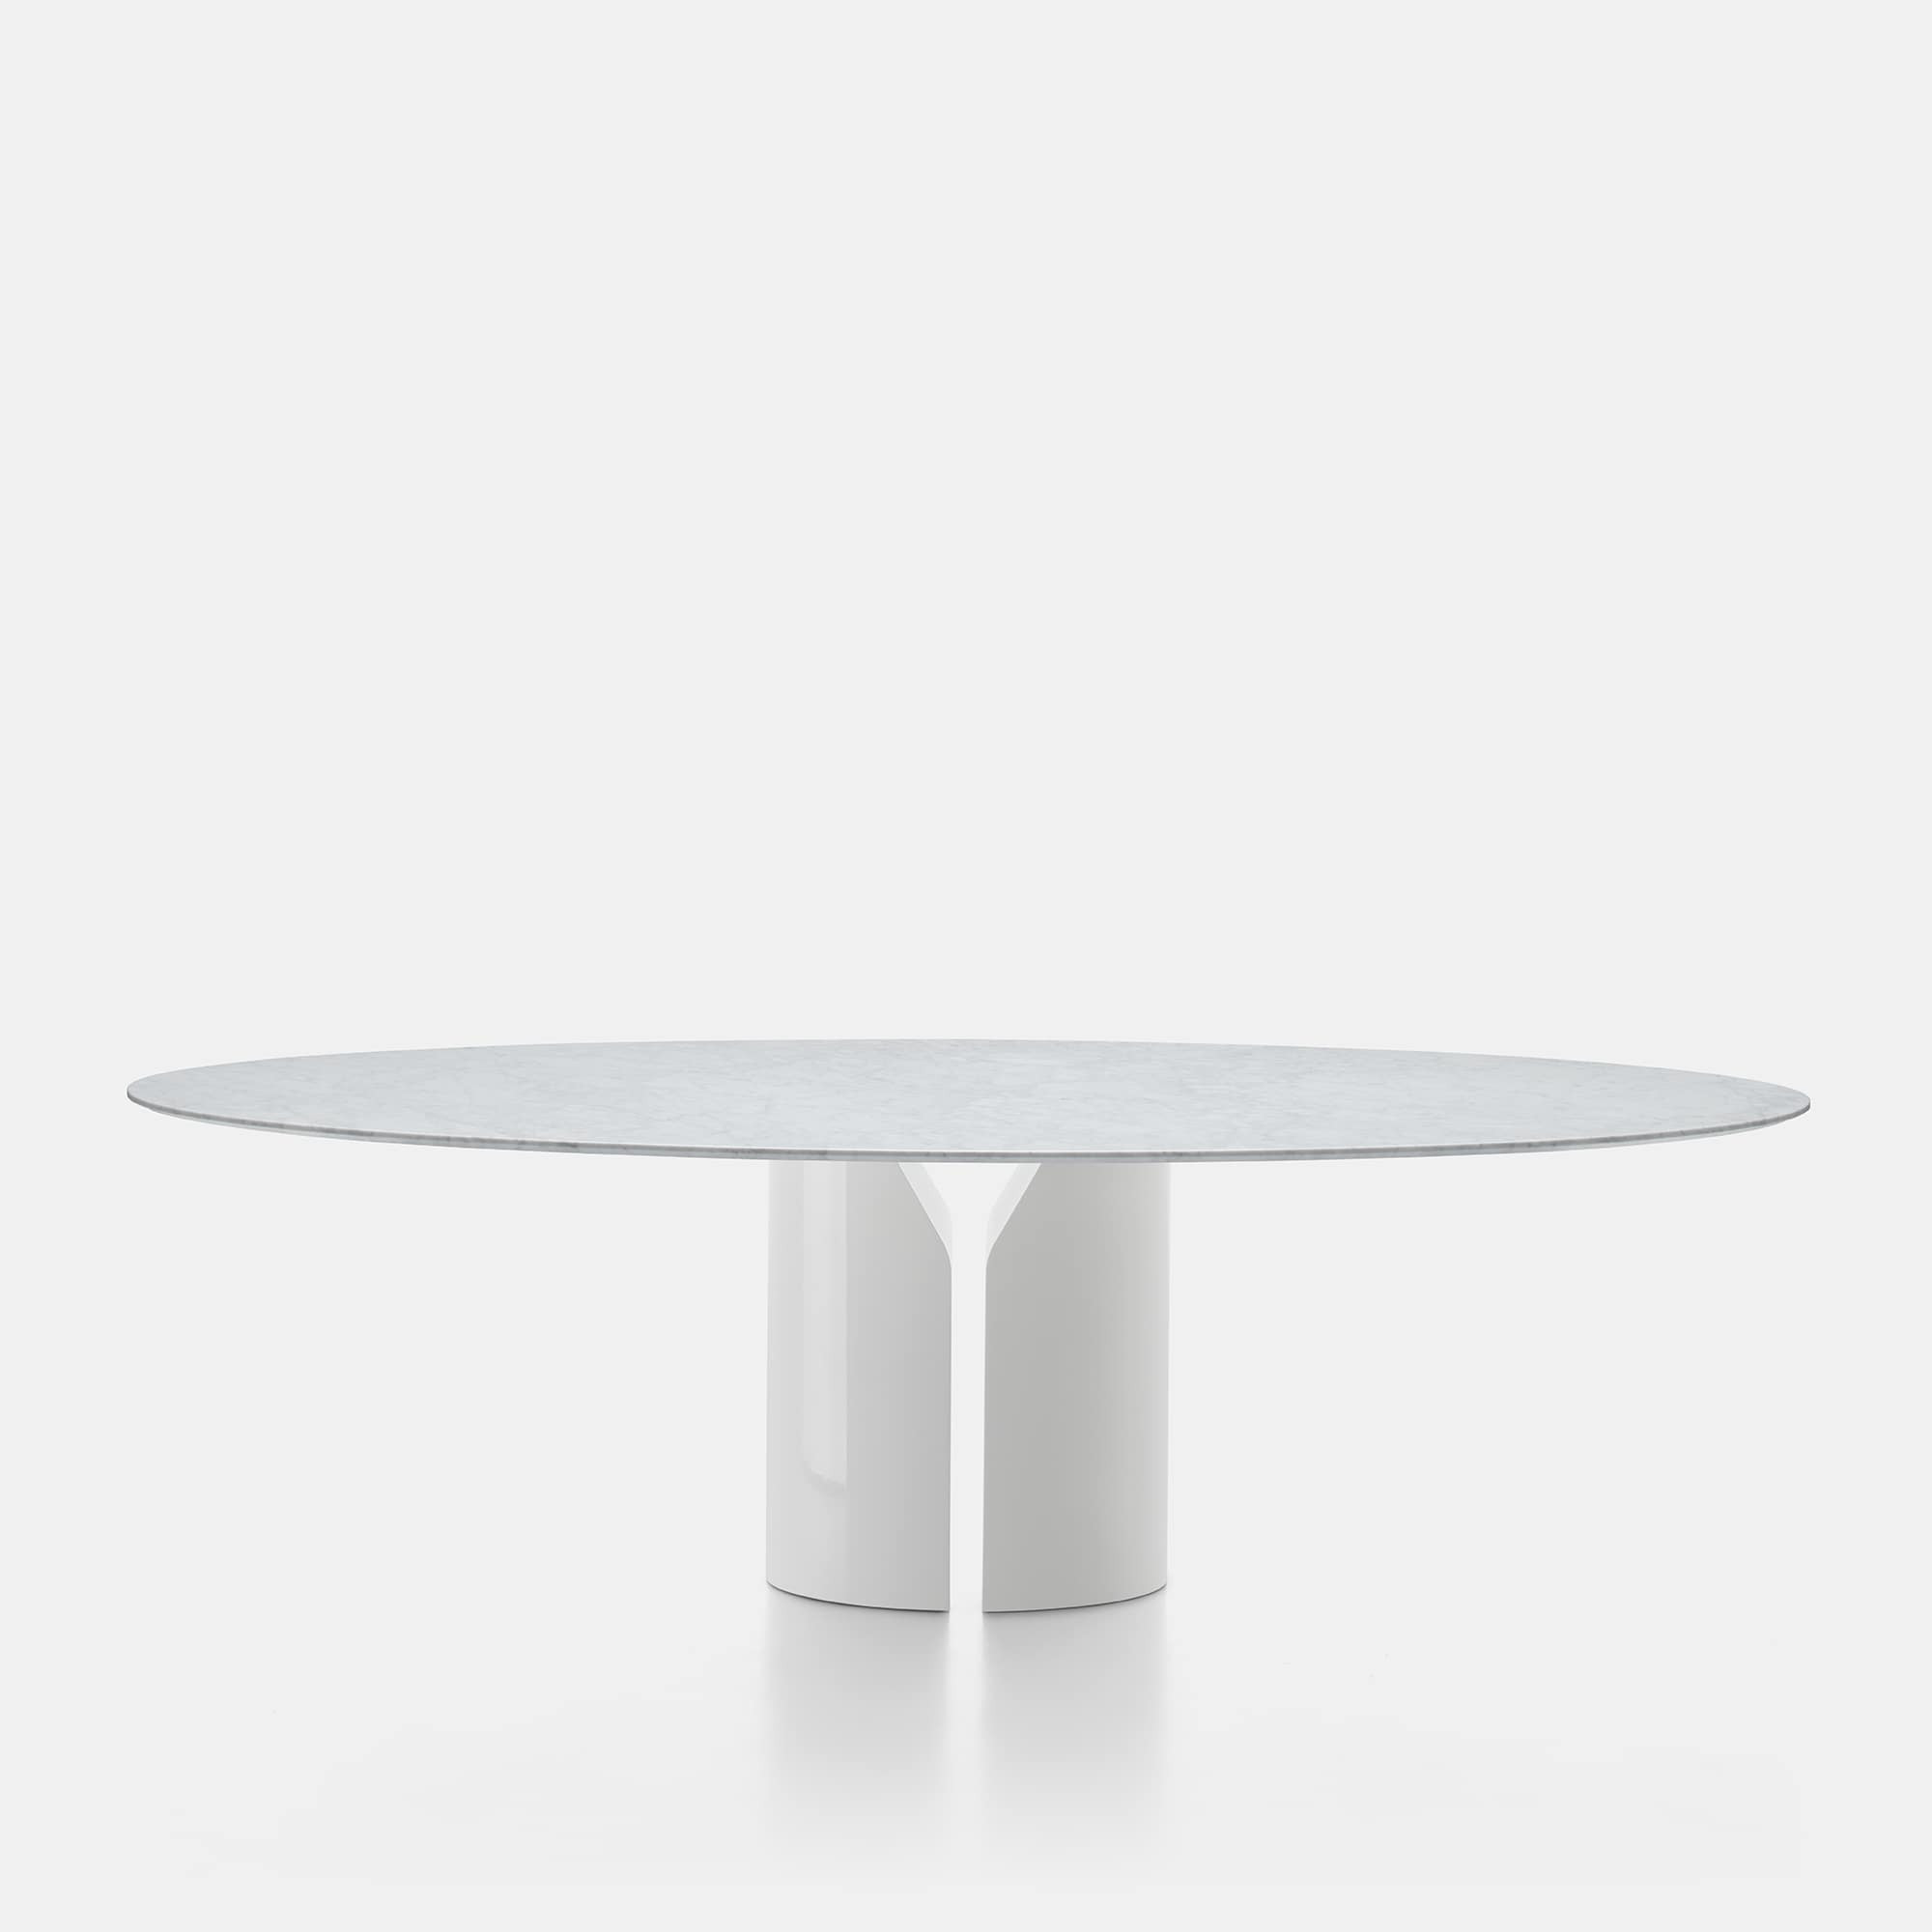 NVL Table ☞ Structure: Matt/Gloss Black Lacquered Base ☞ Top: Marquinia Matt/Gloss Black Marble